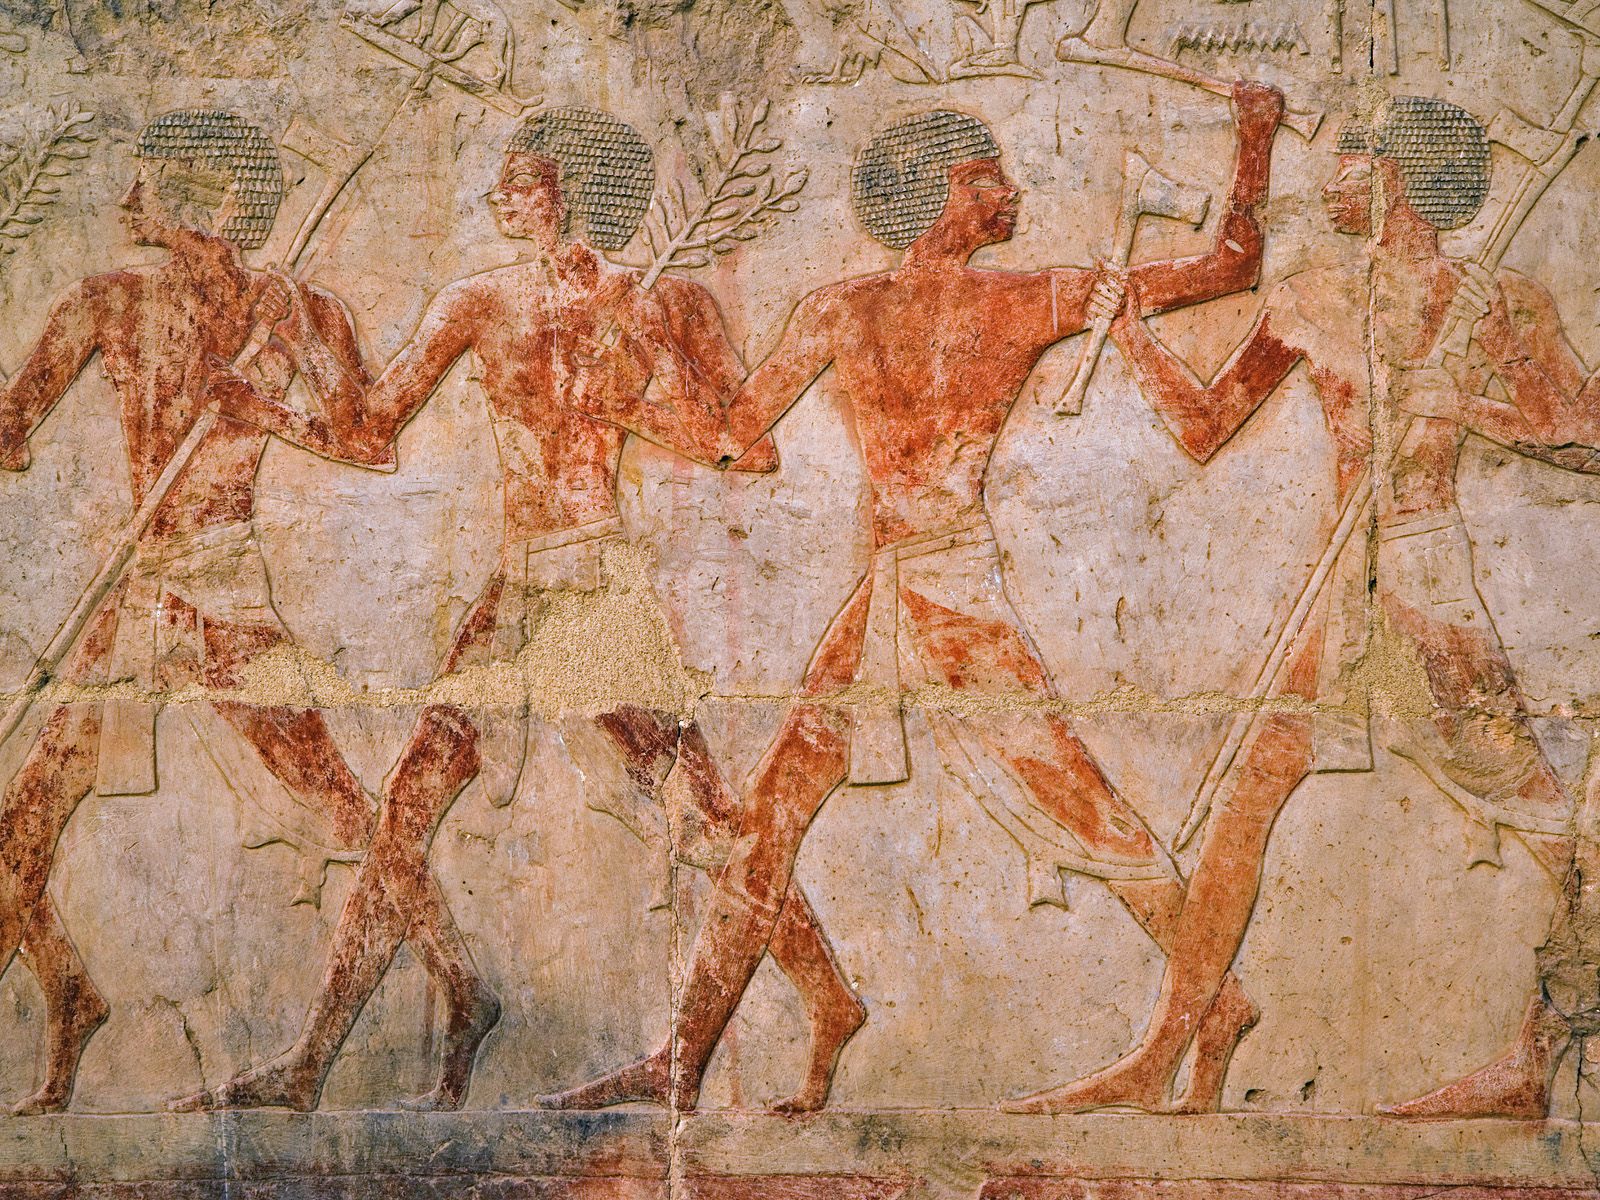 http://4.bp.blogspot.com/_kw1VD16J_Xw/Rx88Z2Zj5NI/AAAAAAAAAn4/RqYbCY_1QKA/s1600/Ancient+Egyptian+Figures+at+Temple+of+Karnak,+Luxor,+Egypt.jpg